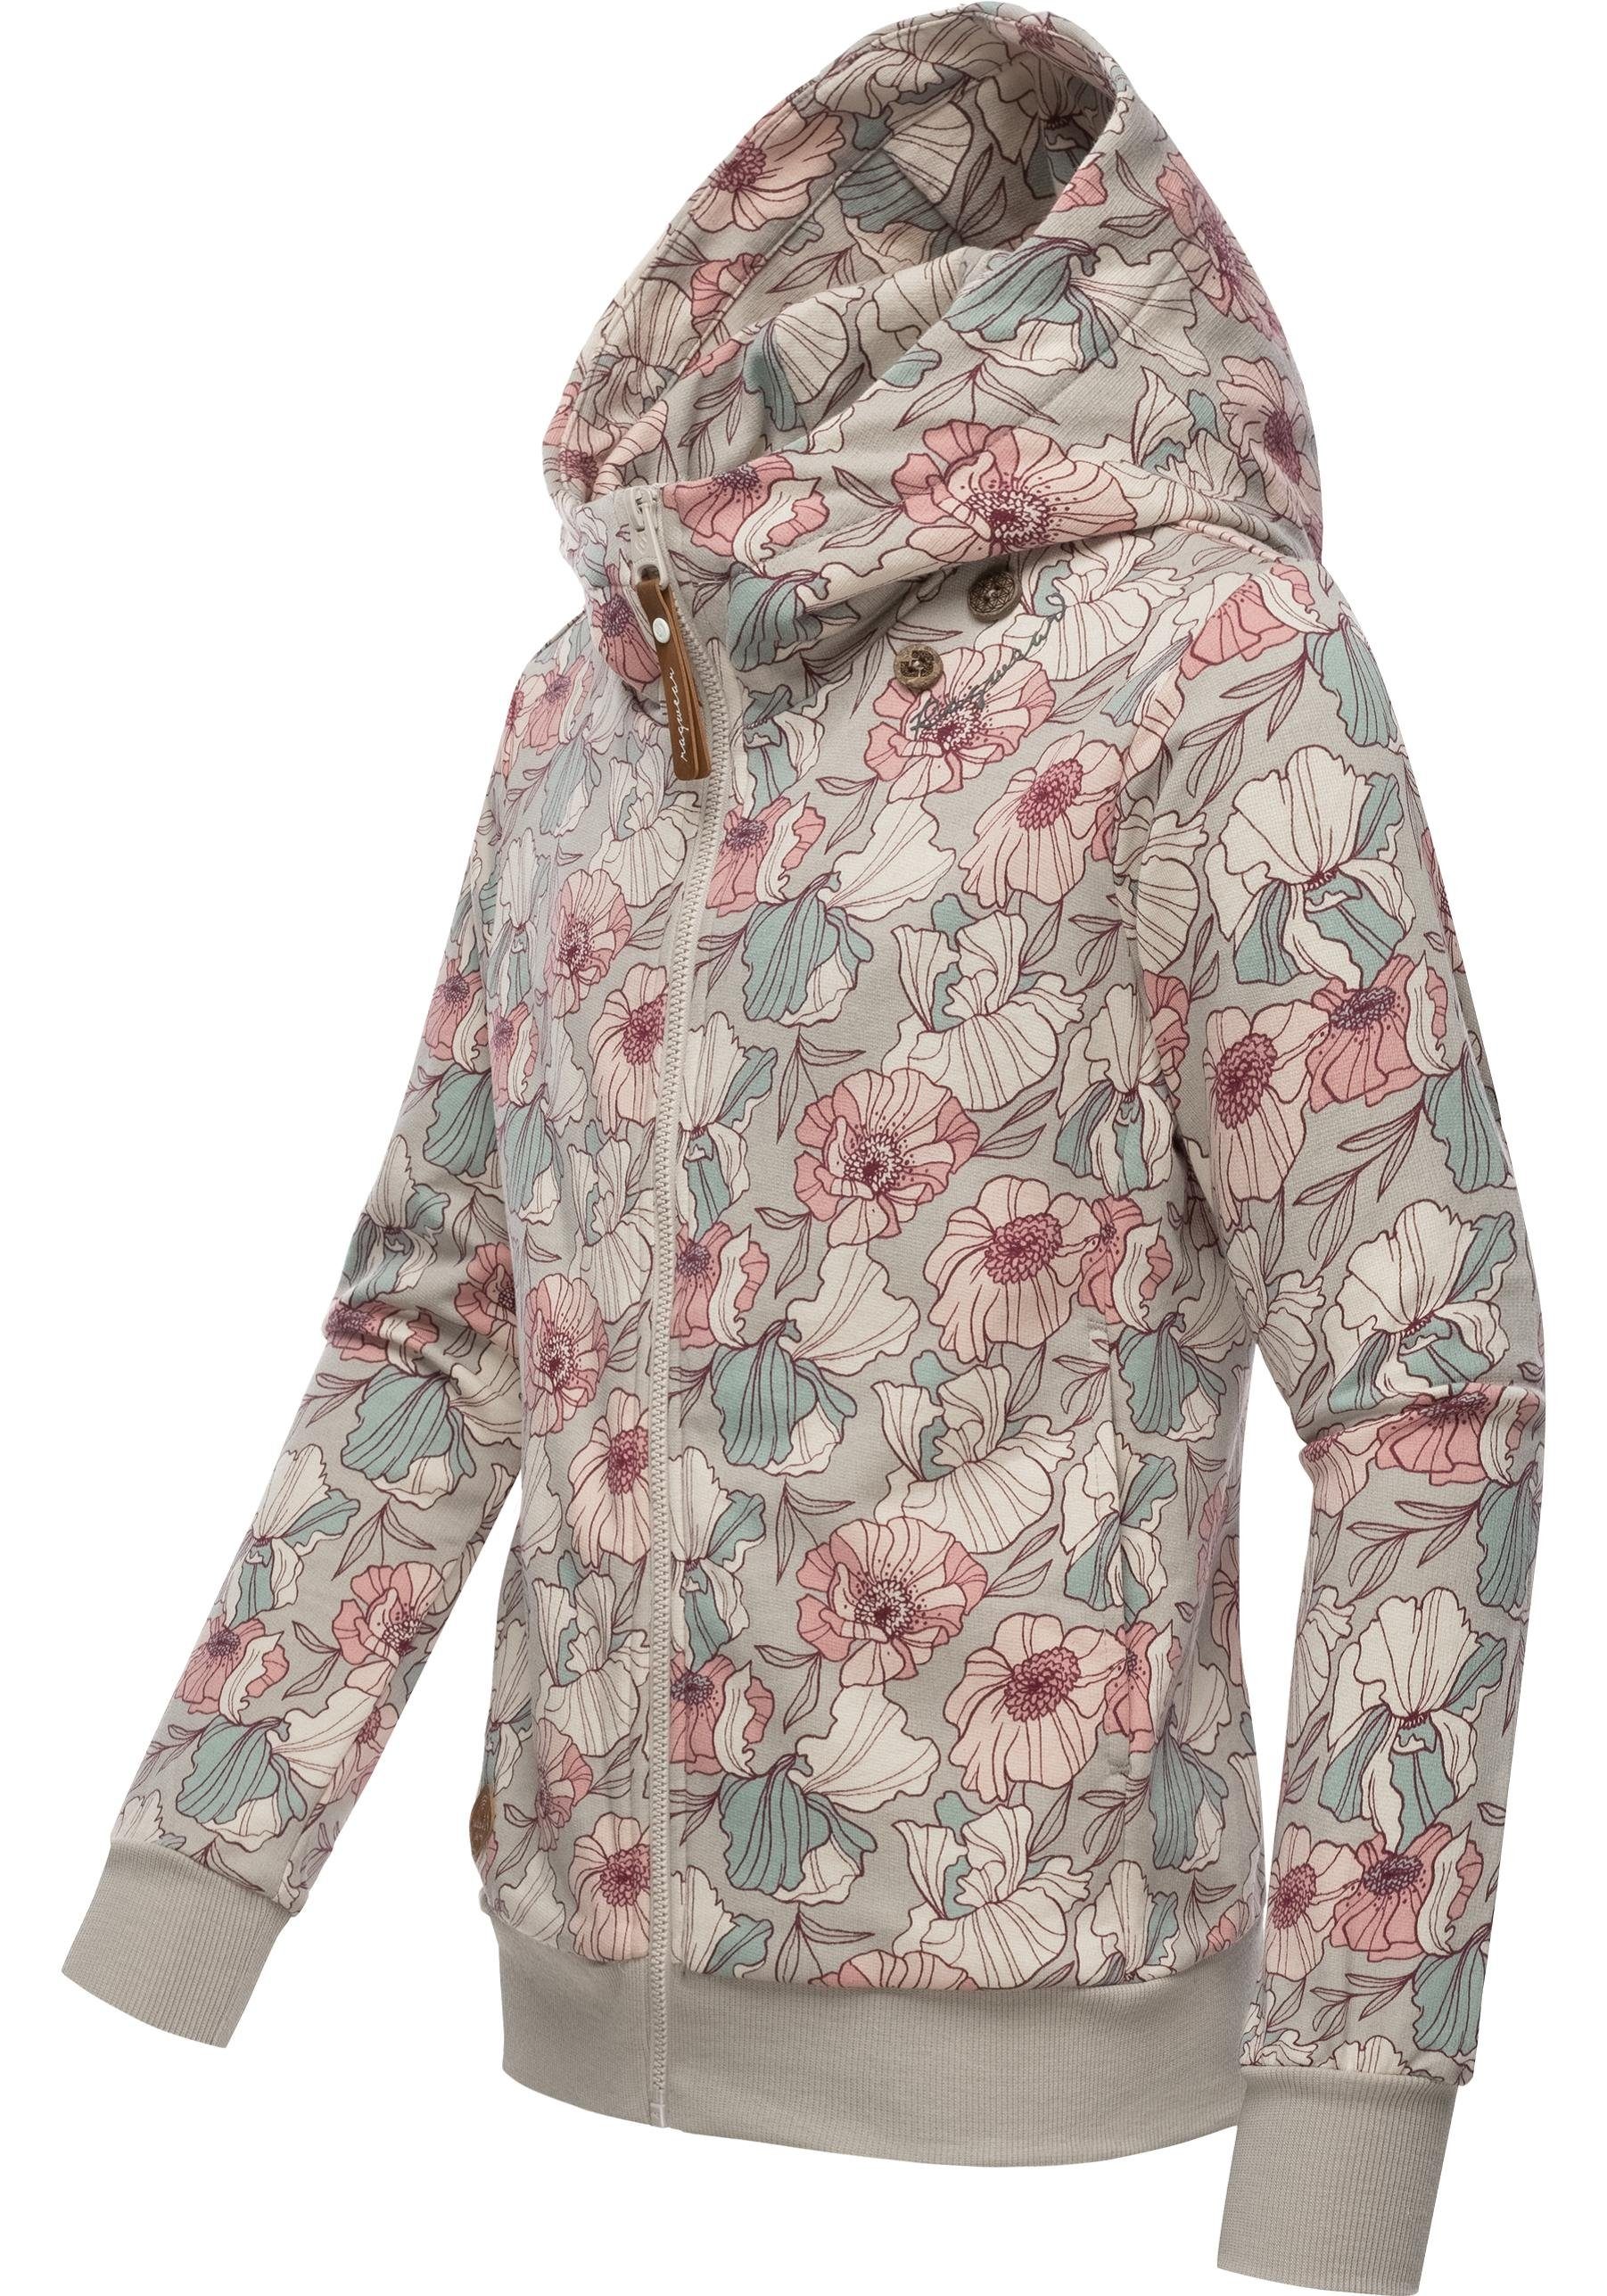 Ragwear Kapuzensweatjacke Agneska Freesia beige Blumenmuster Zip-Jacke Stylische mit Mädchen